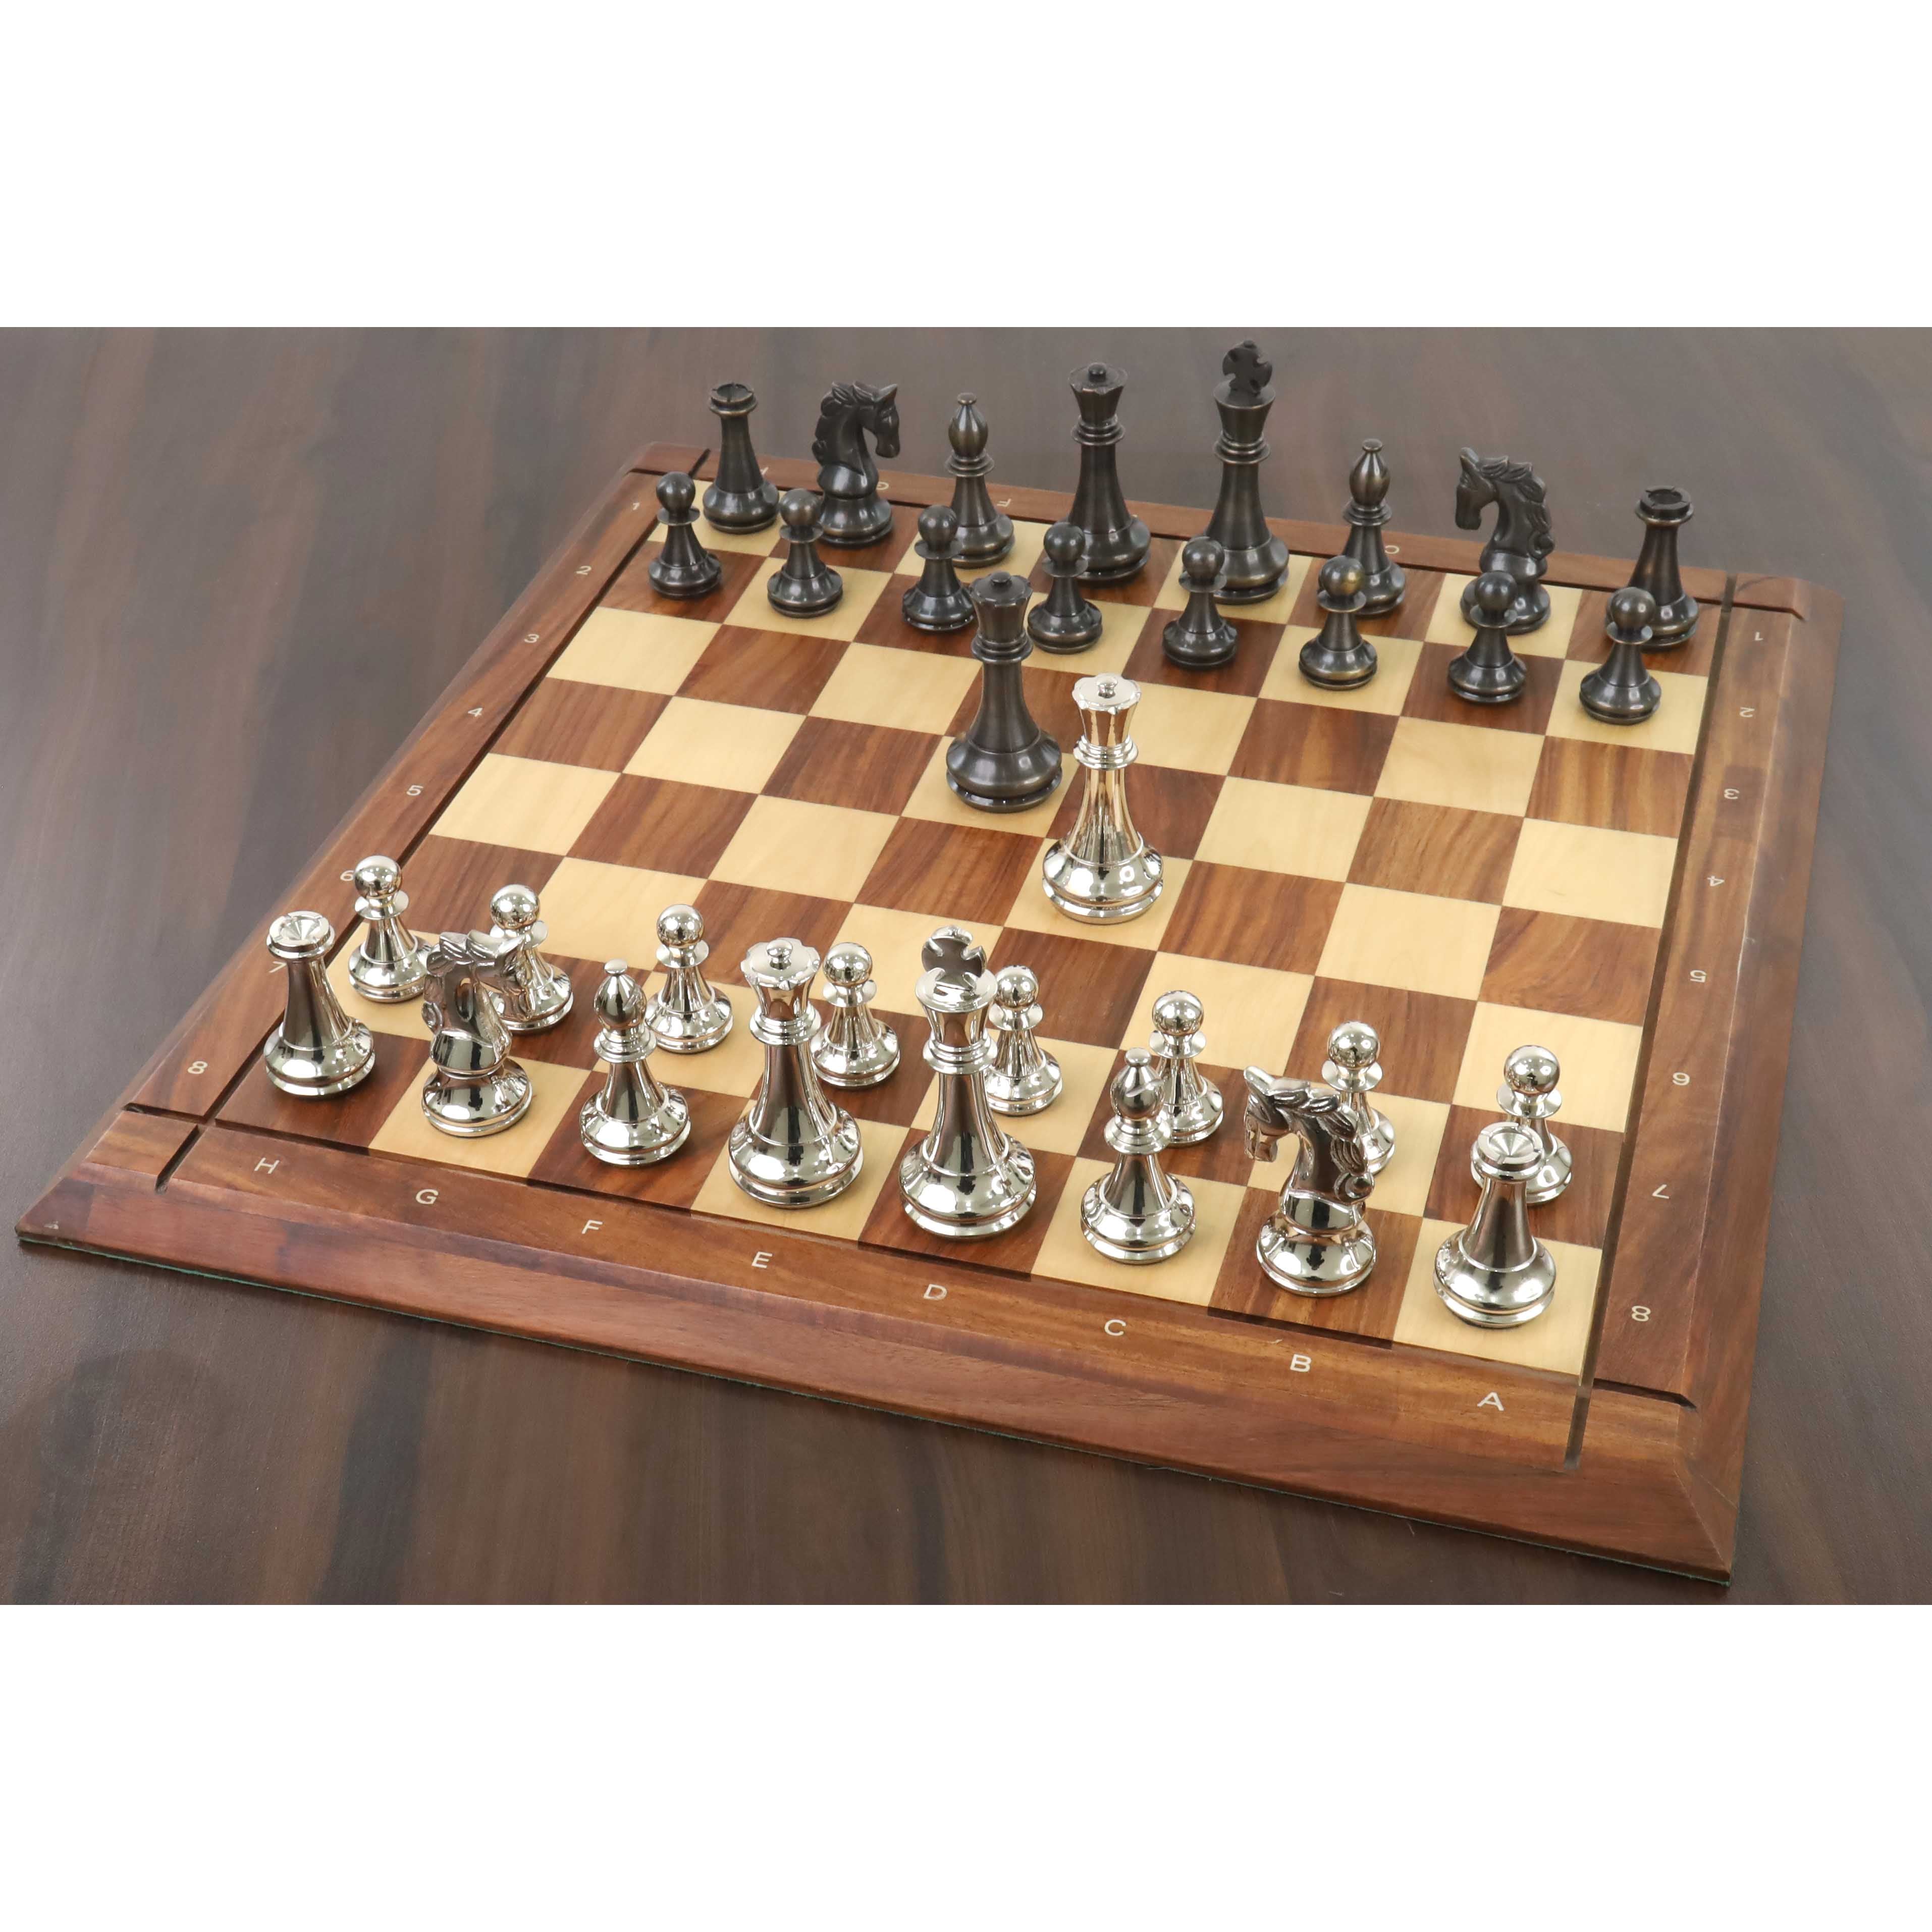 Brass Chess Set combo of 3.9" Modern Chess Pieces + 15"